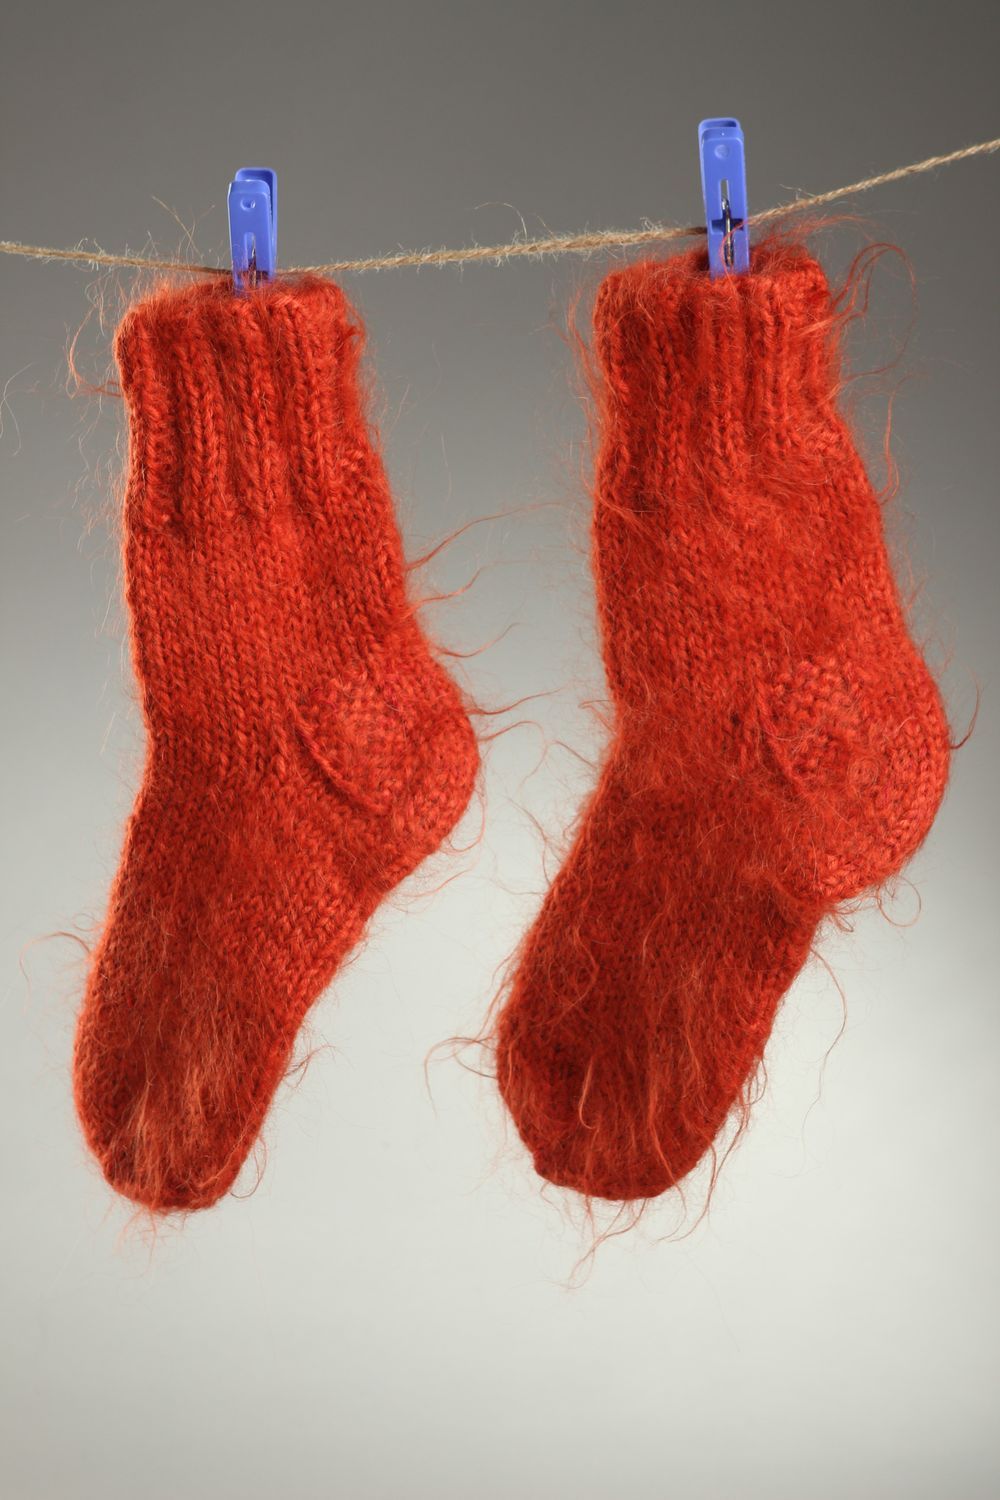 Homemade knitted socks best woolen socks winter clothing heat socks cool gifts photo 1